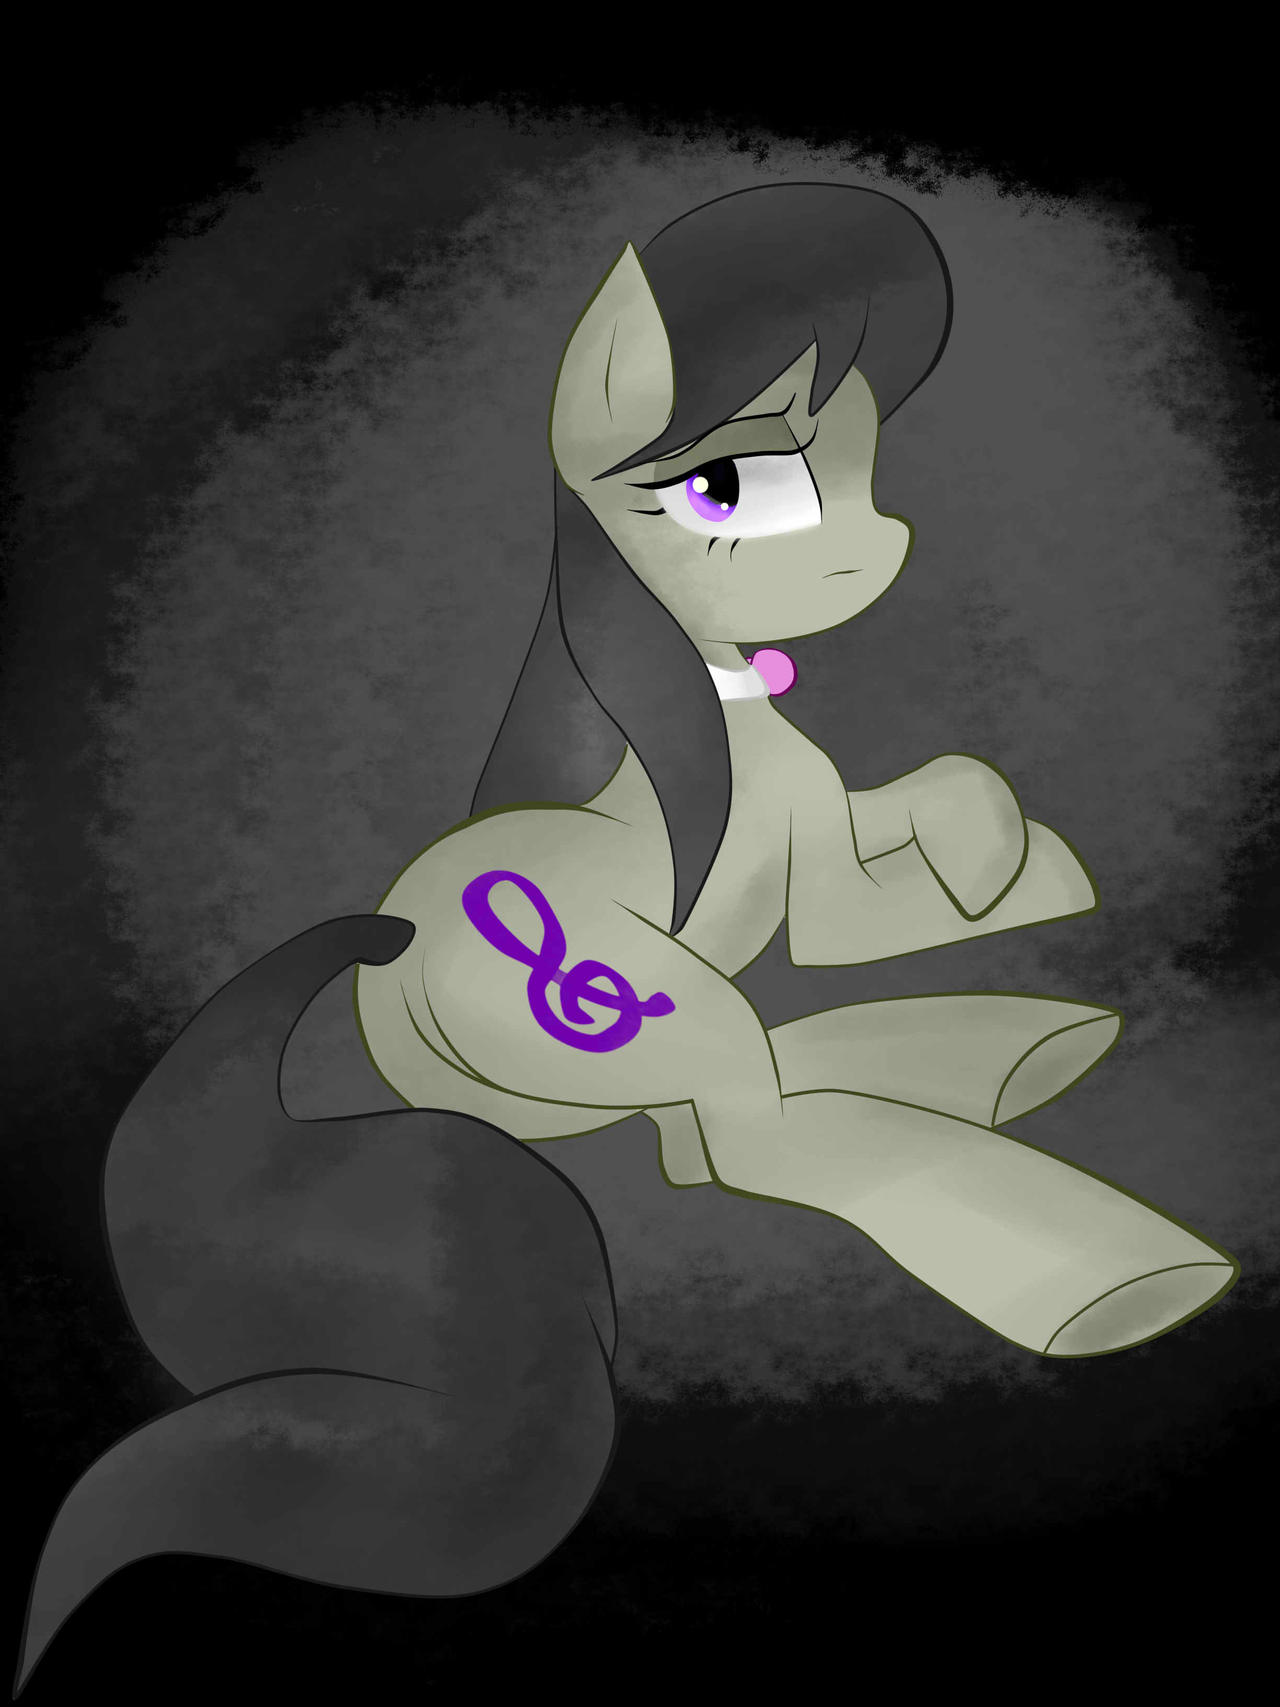 Octavia again?